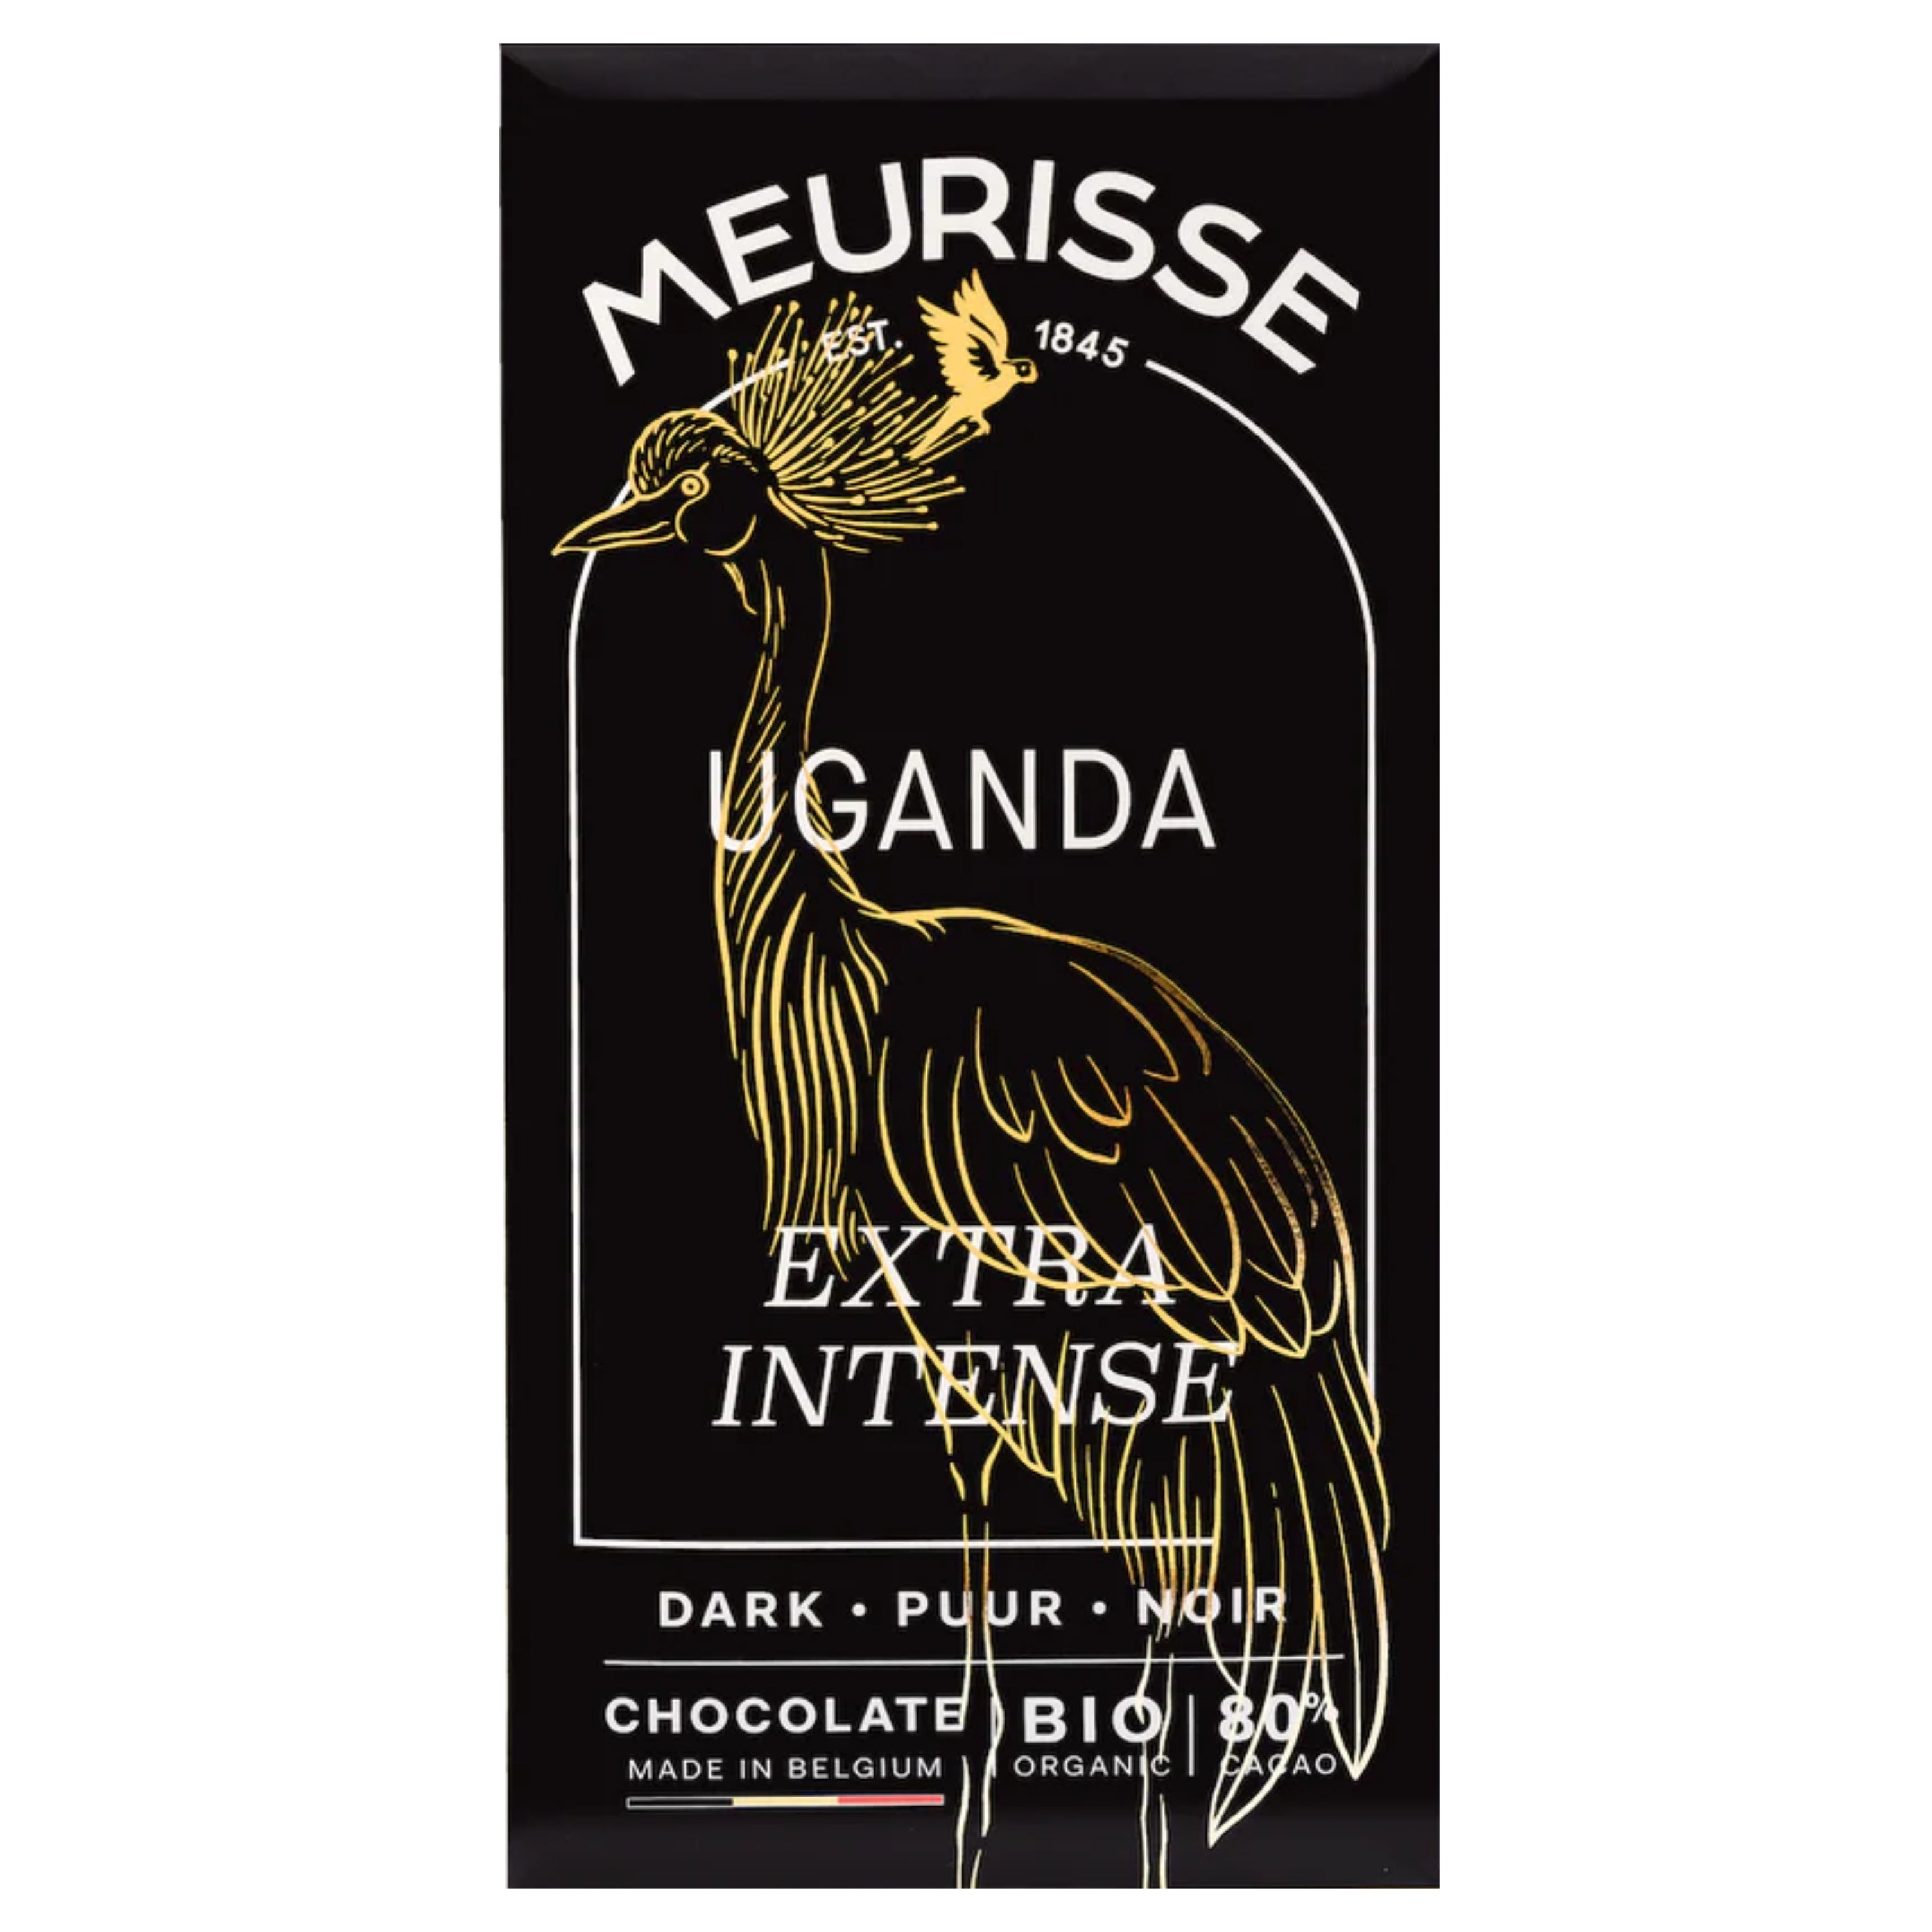 Meurisse Dark chocolate from Uganda 80% Cacao – 3.5oz